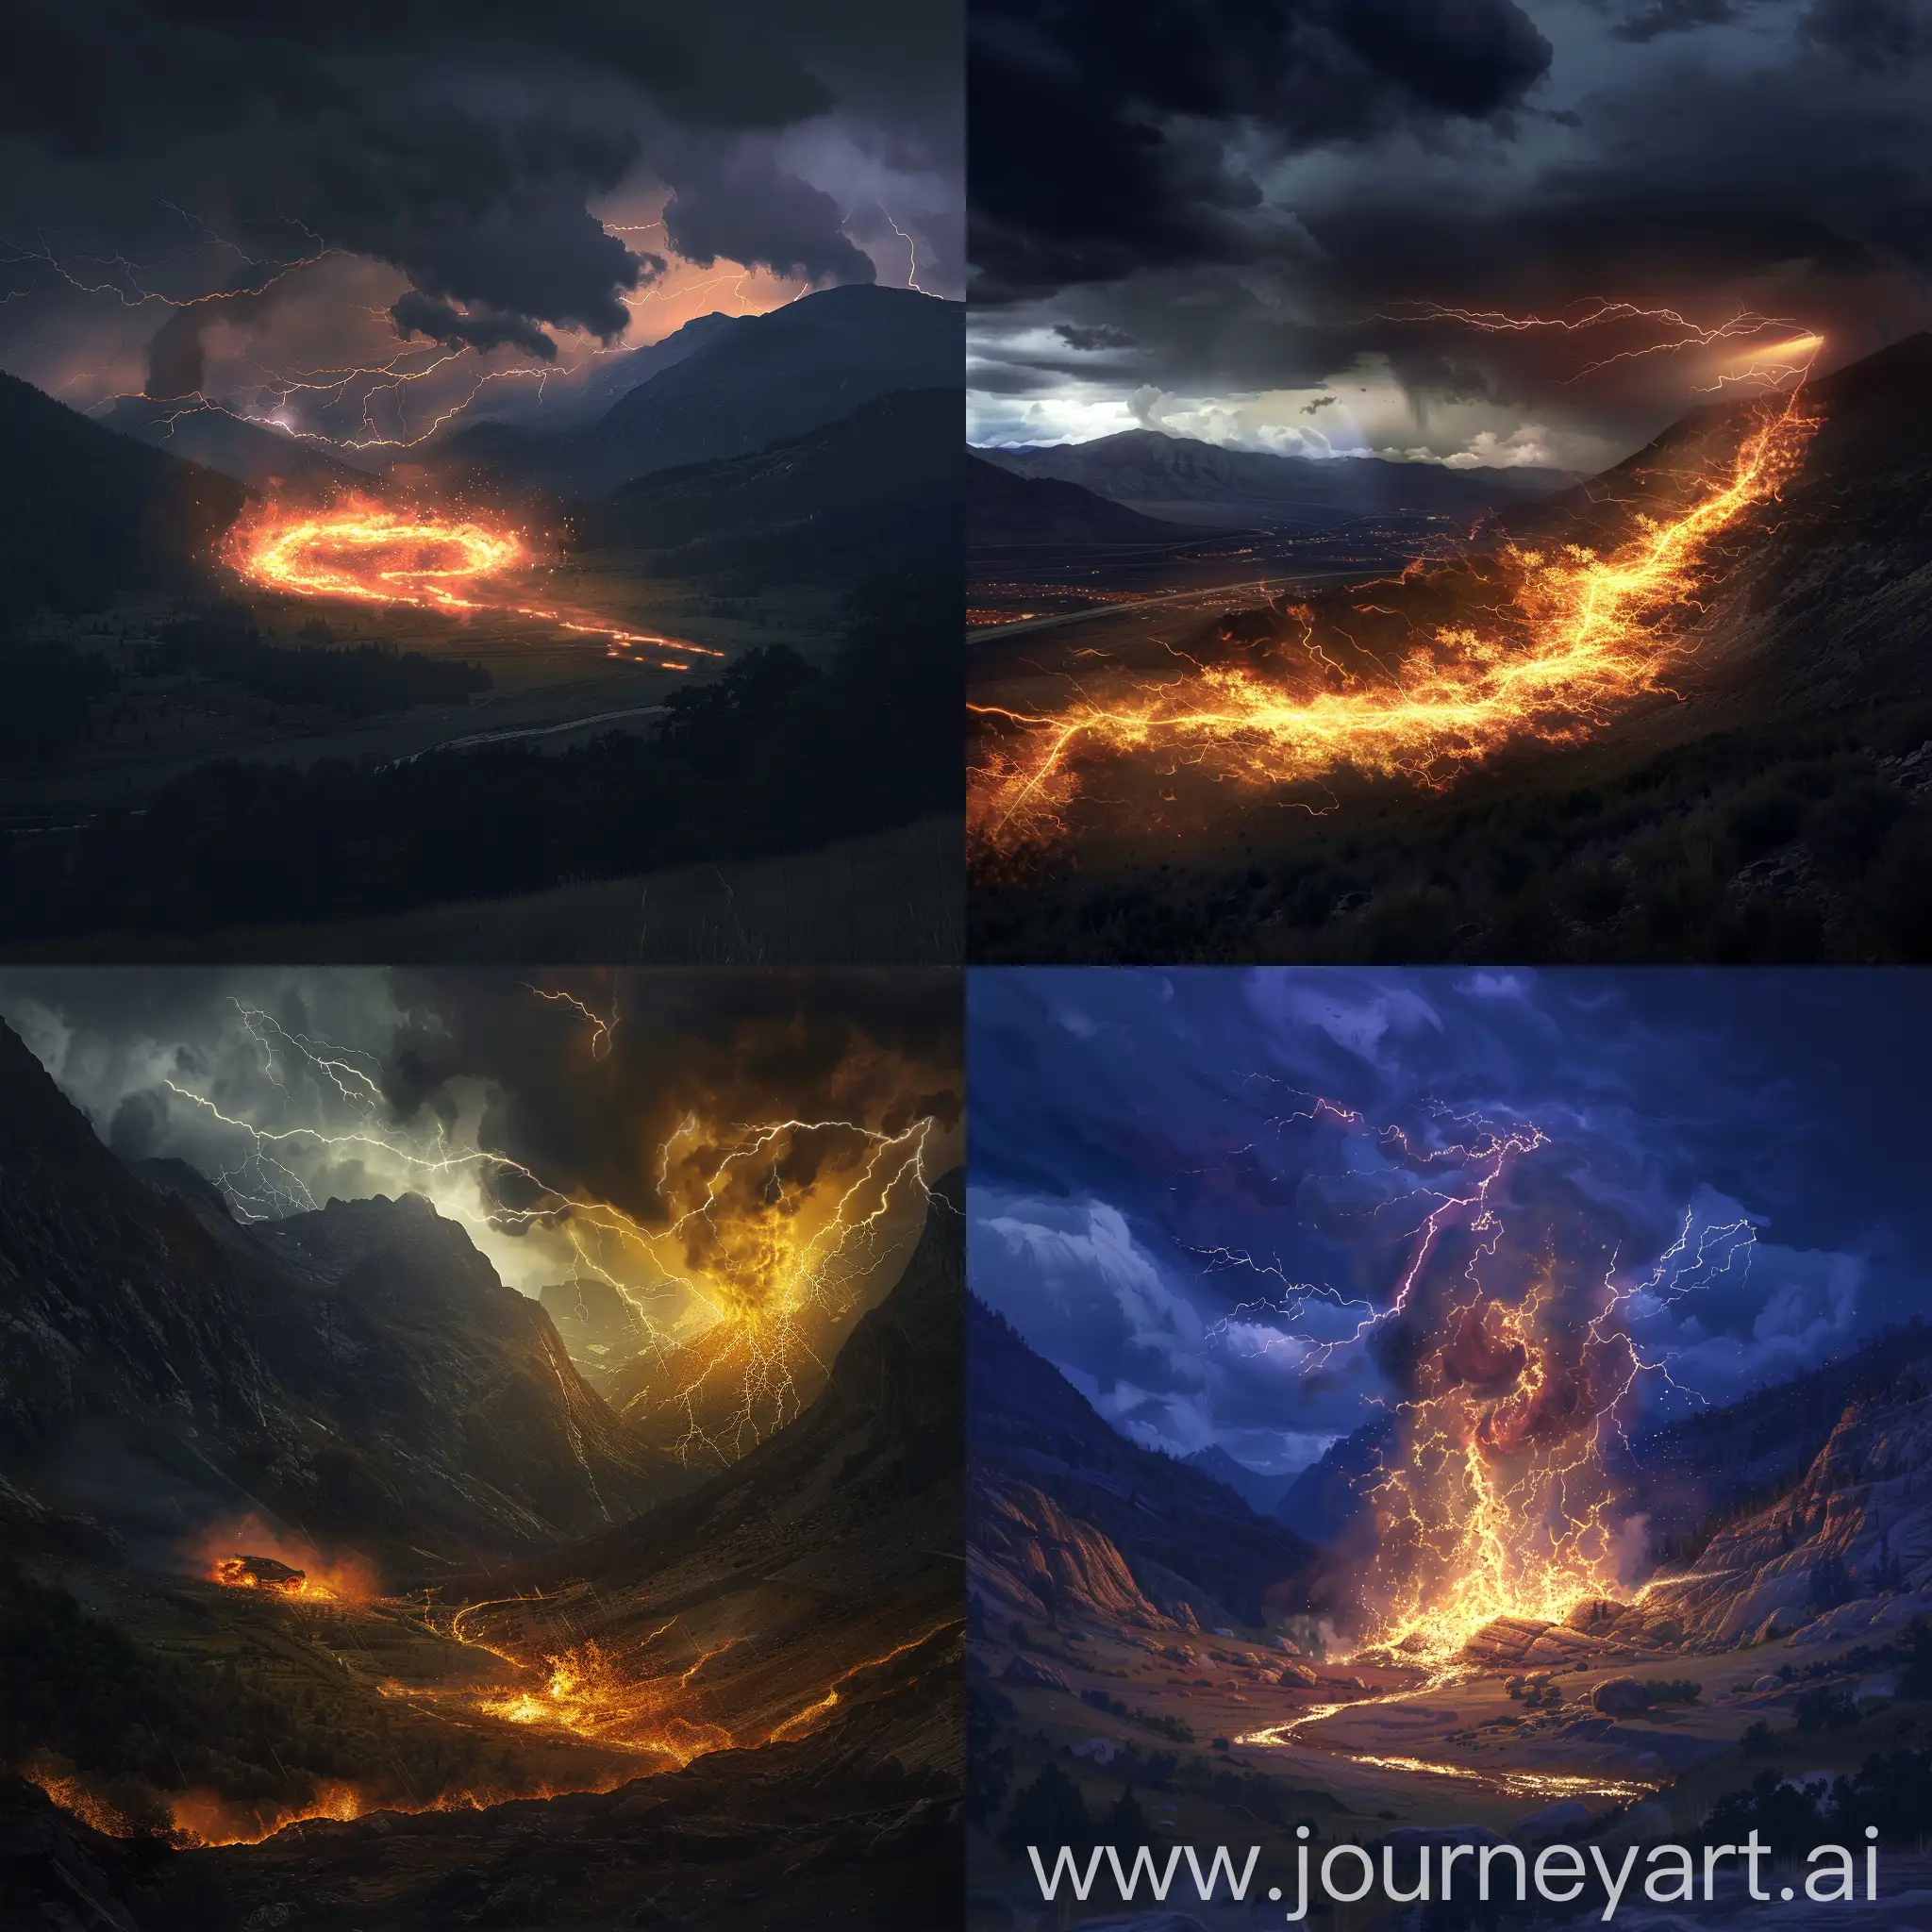 Nighttime-Thunderstorm-FireLit-Valley-Illuminated-by-Lightning